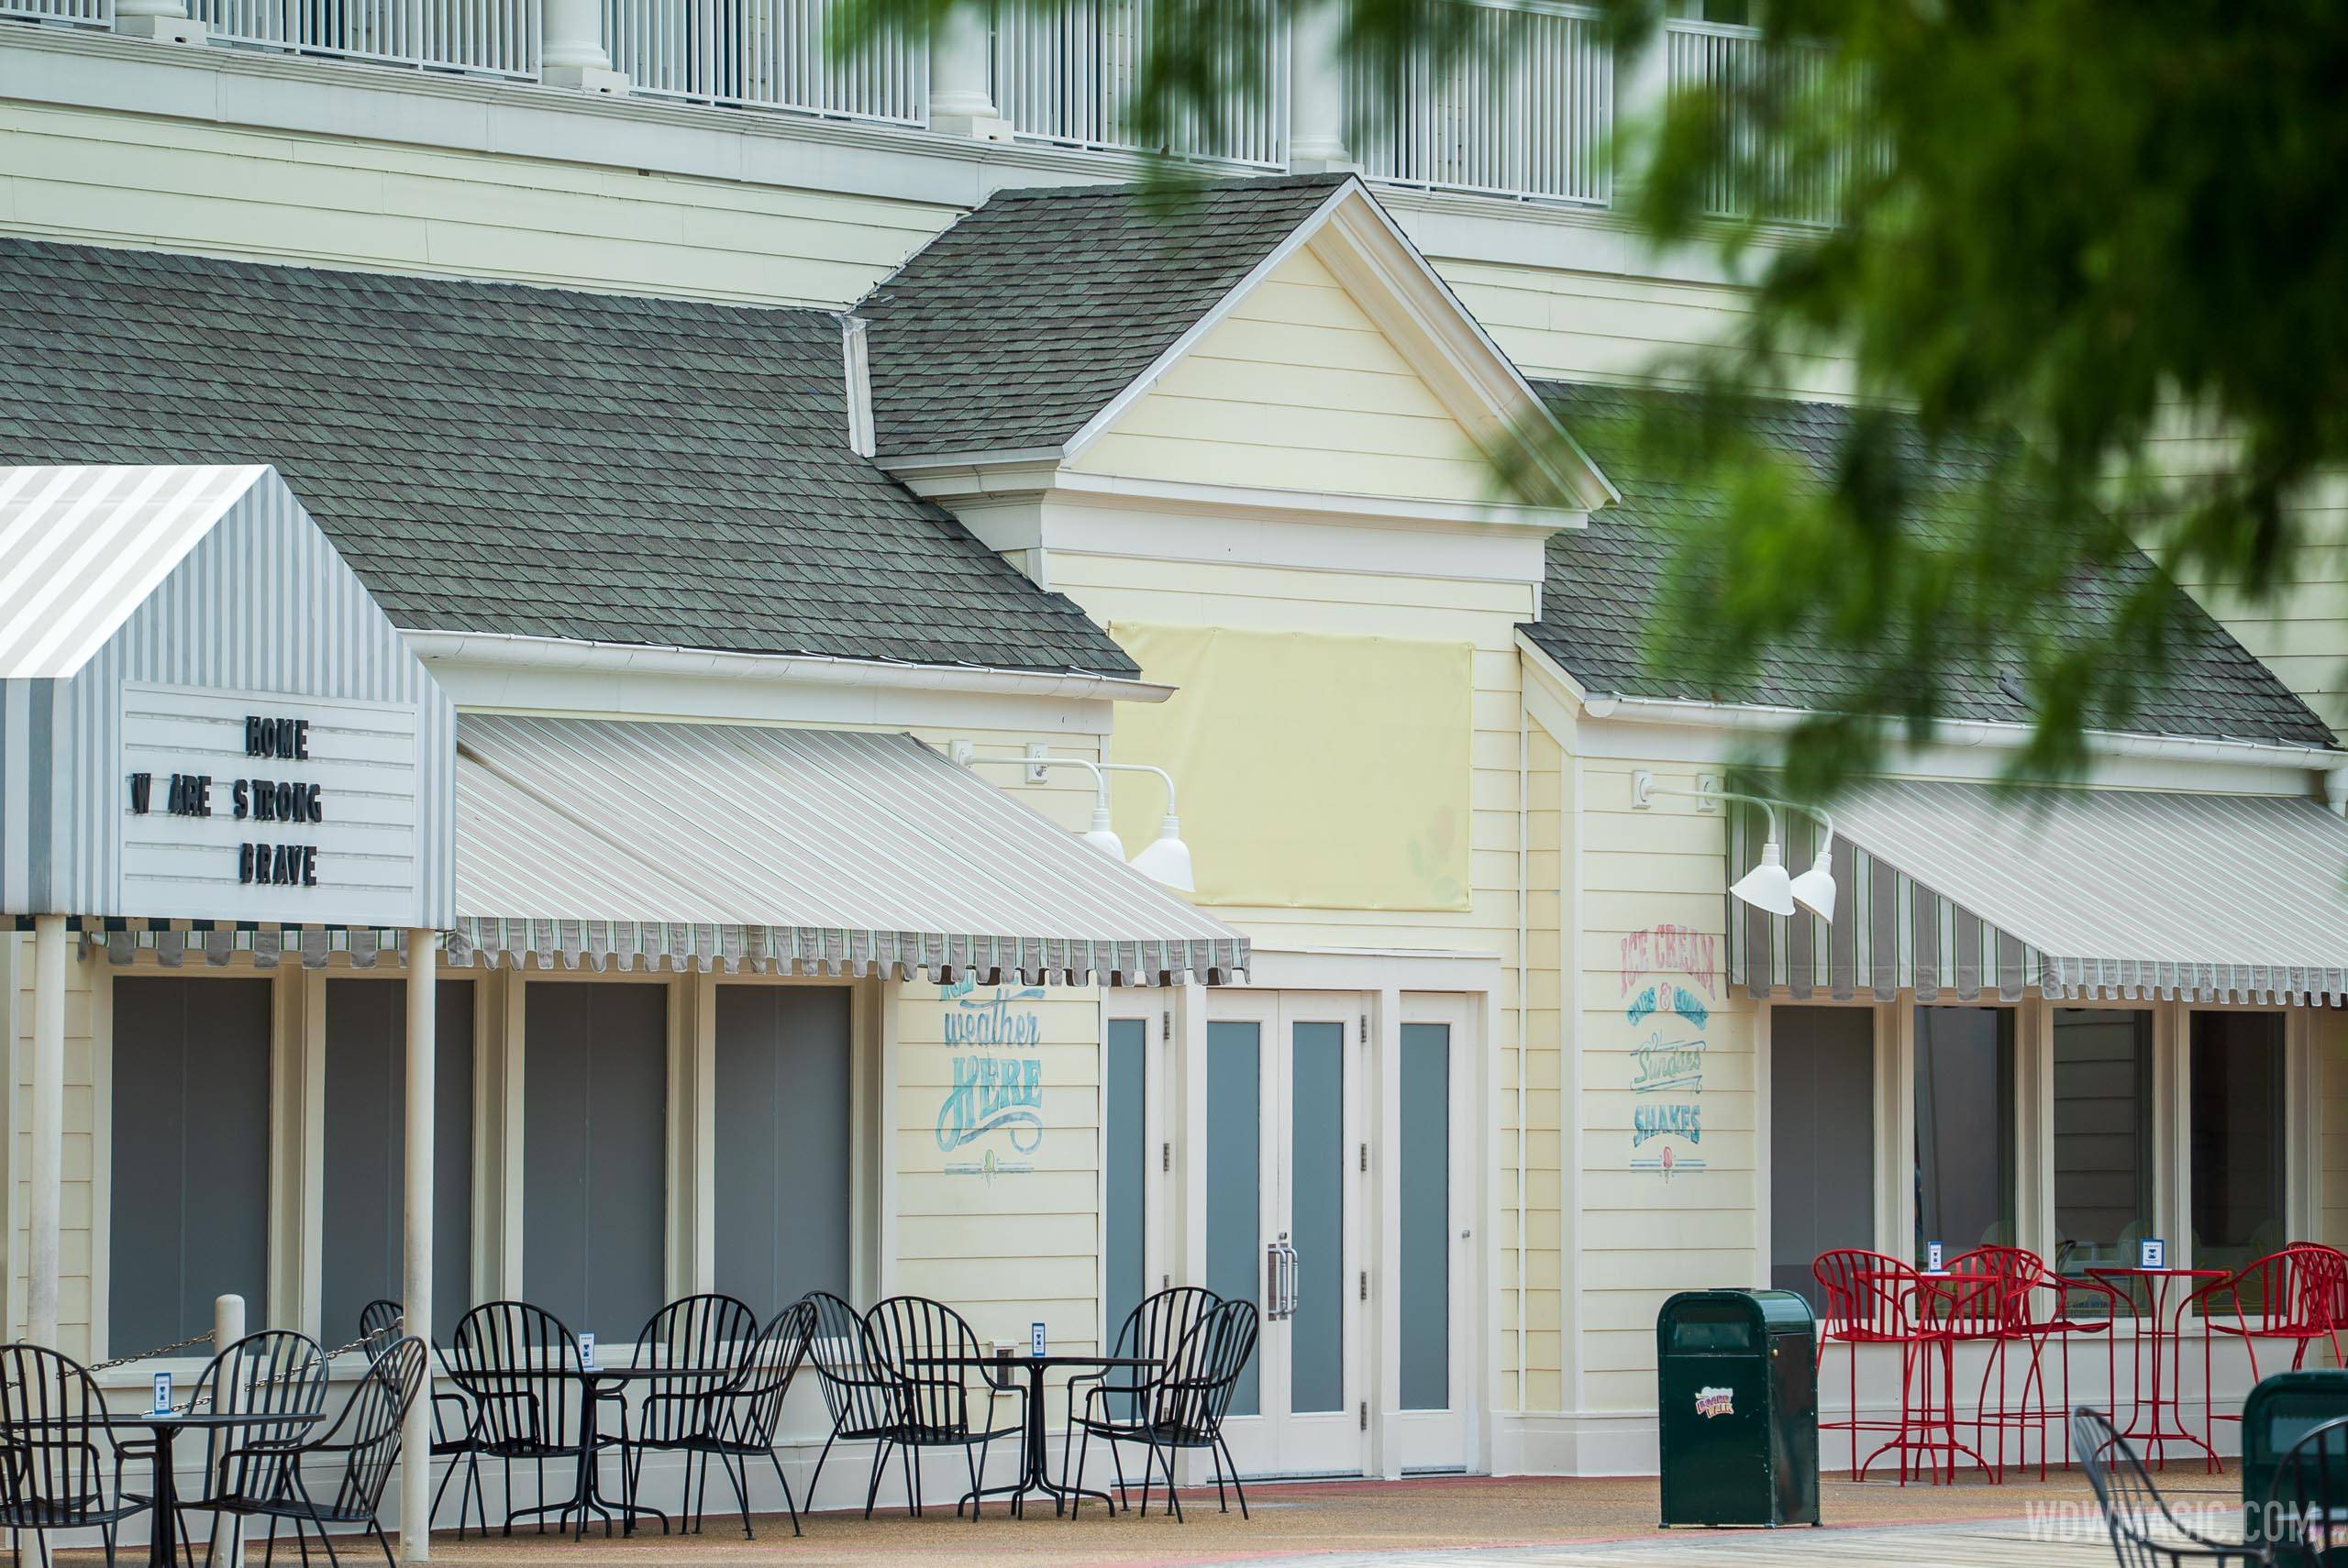 Ample Hills Creamery closed at Disney's Boardwalk